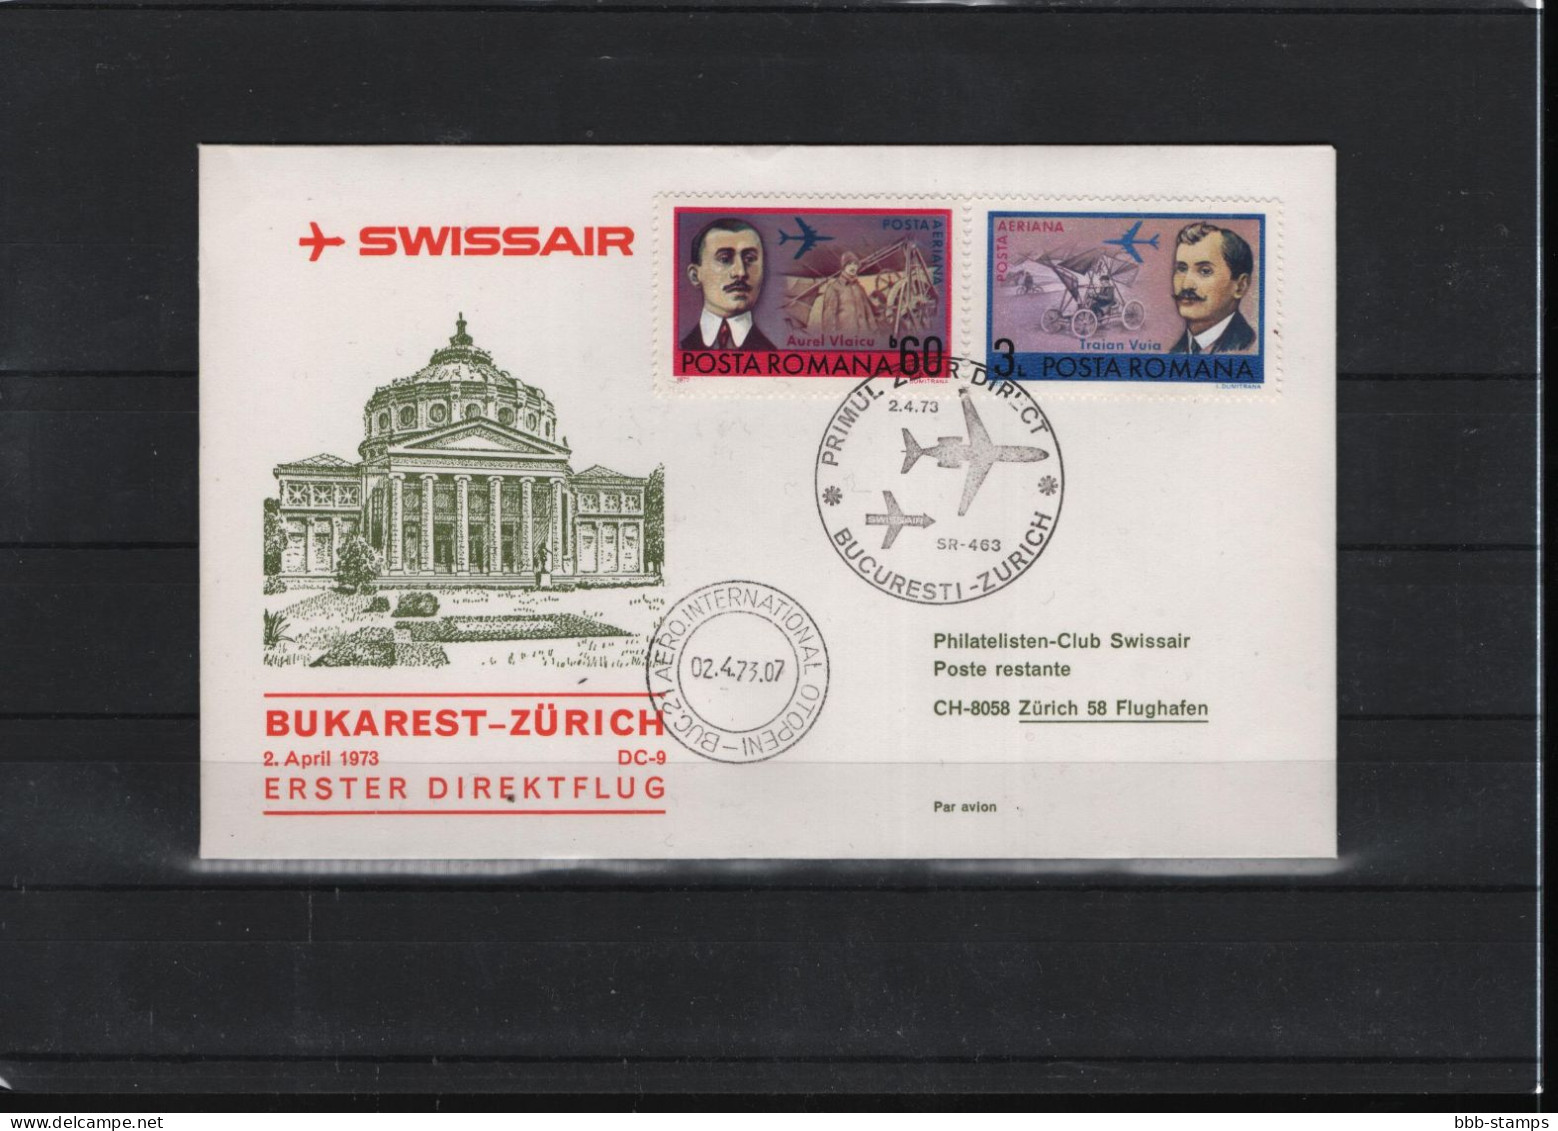 Schweiz Luftpost FFC Swissair  2.4.1973 Bukarest - Zürich - First Flight Covers